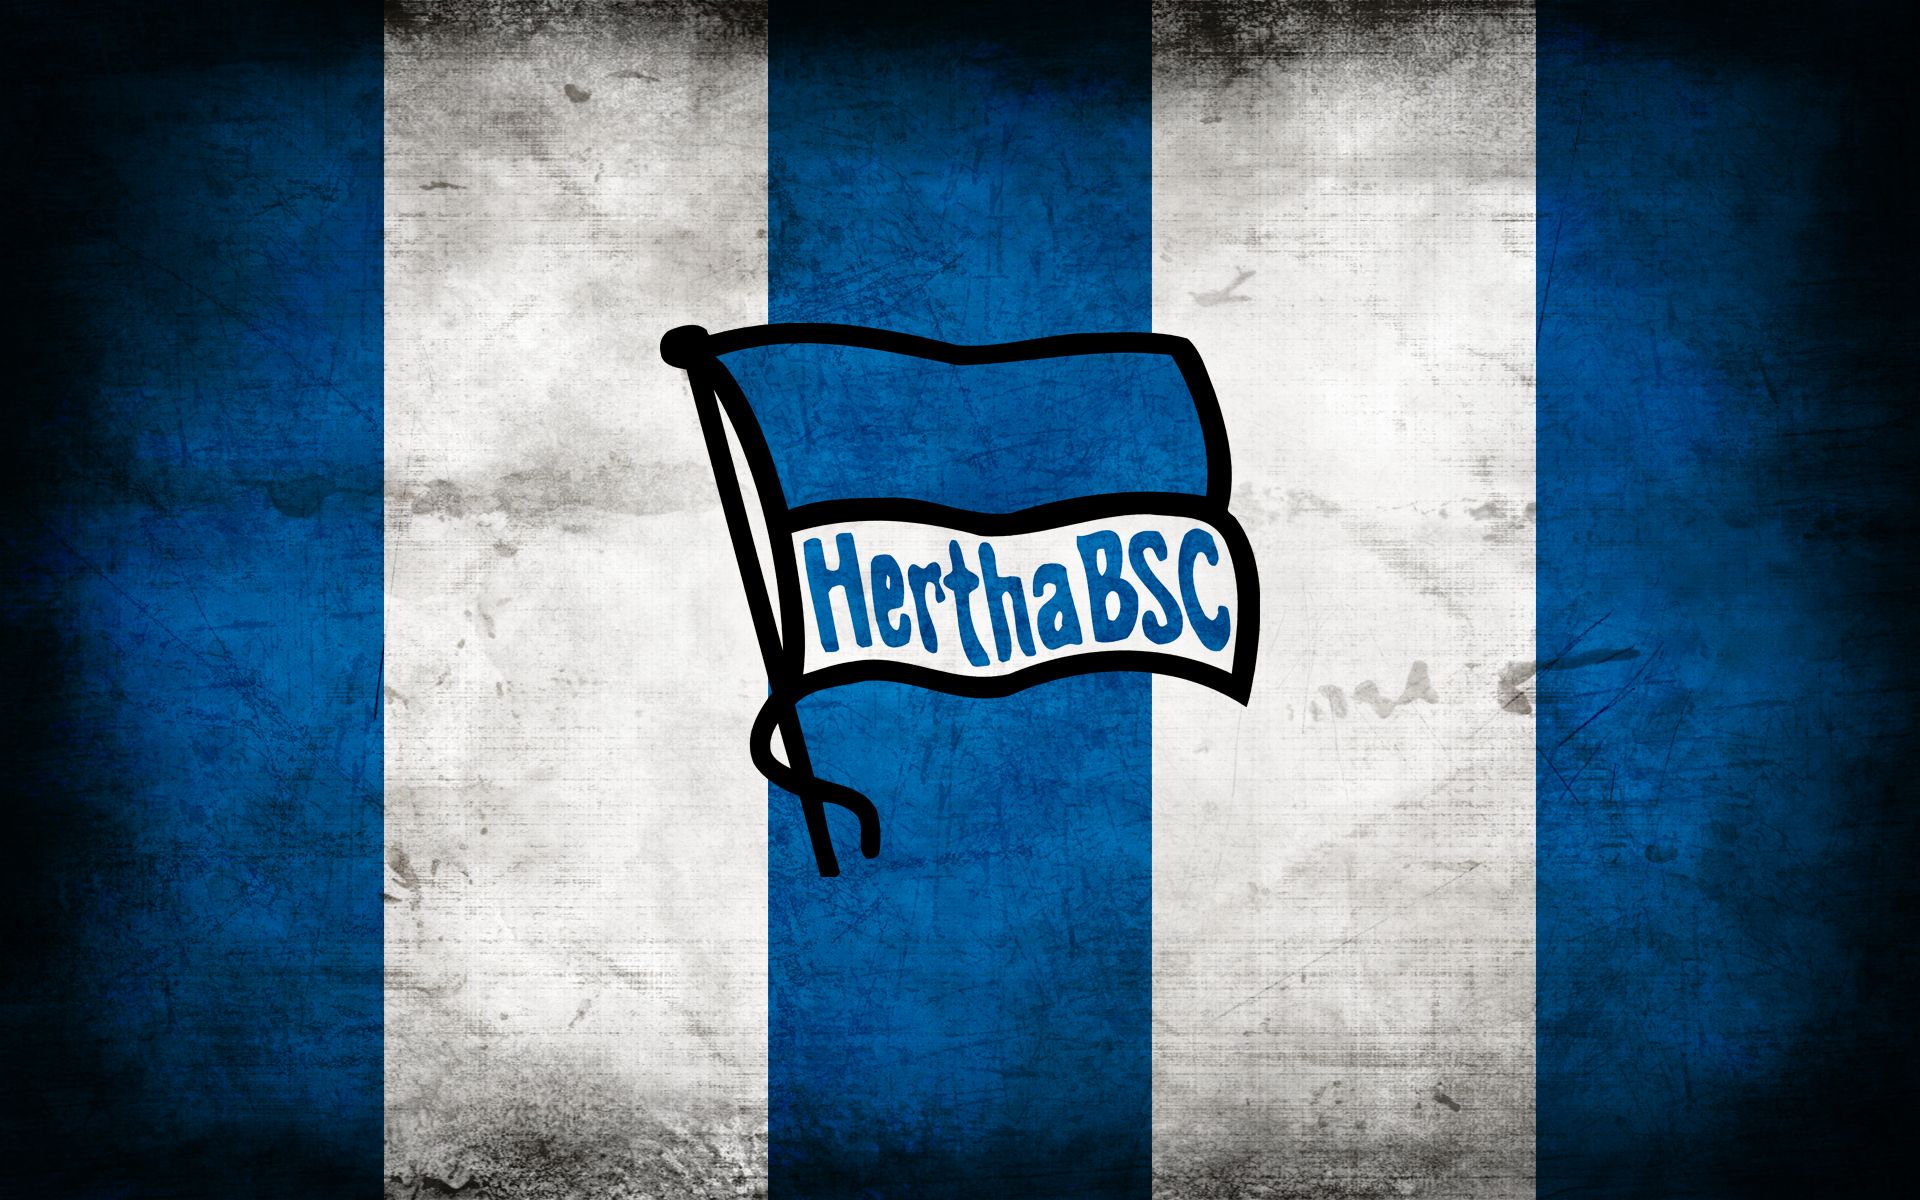 Descargar fondos de escritorio de Hertha Bsc HD